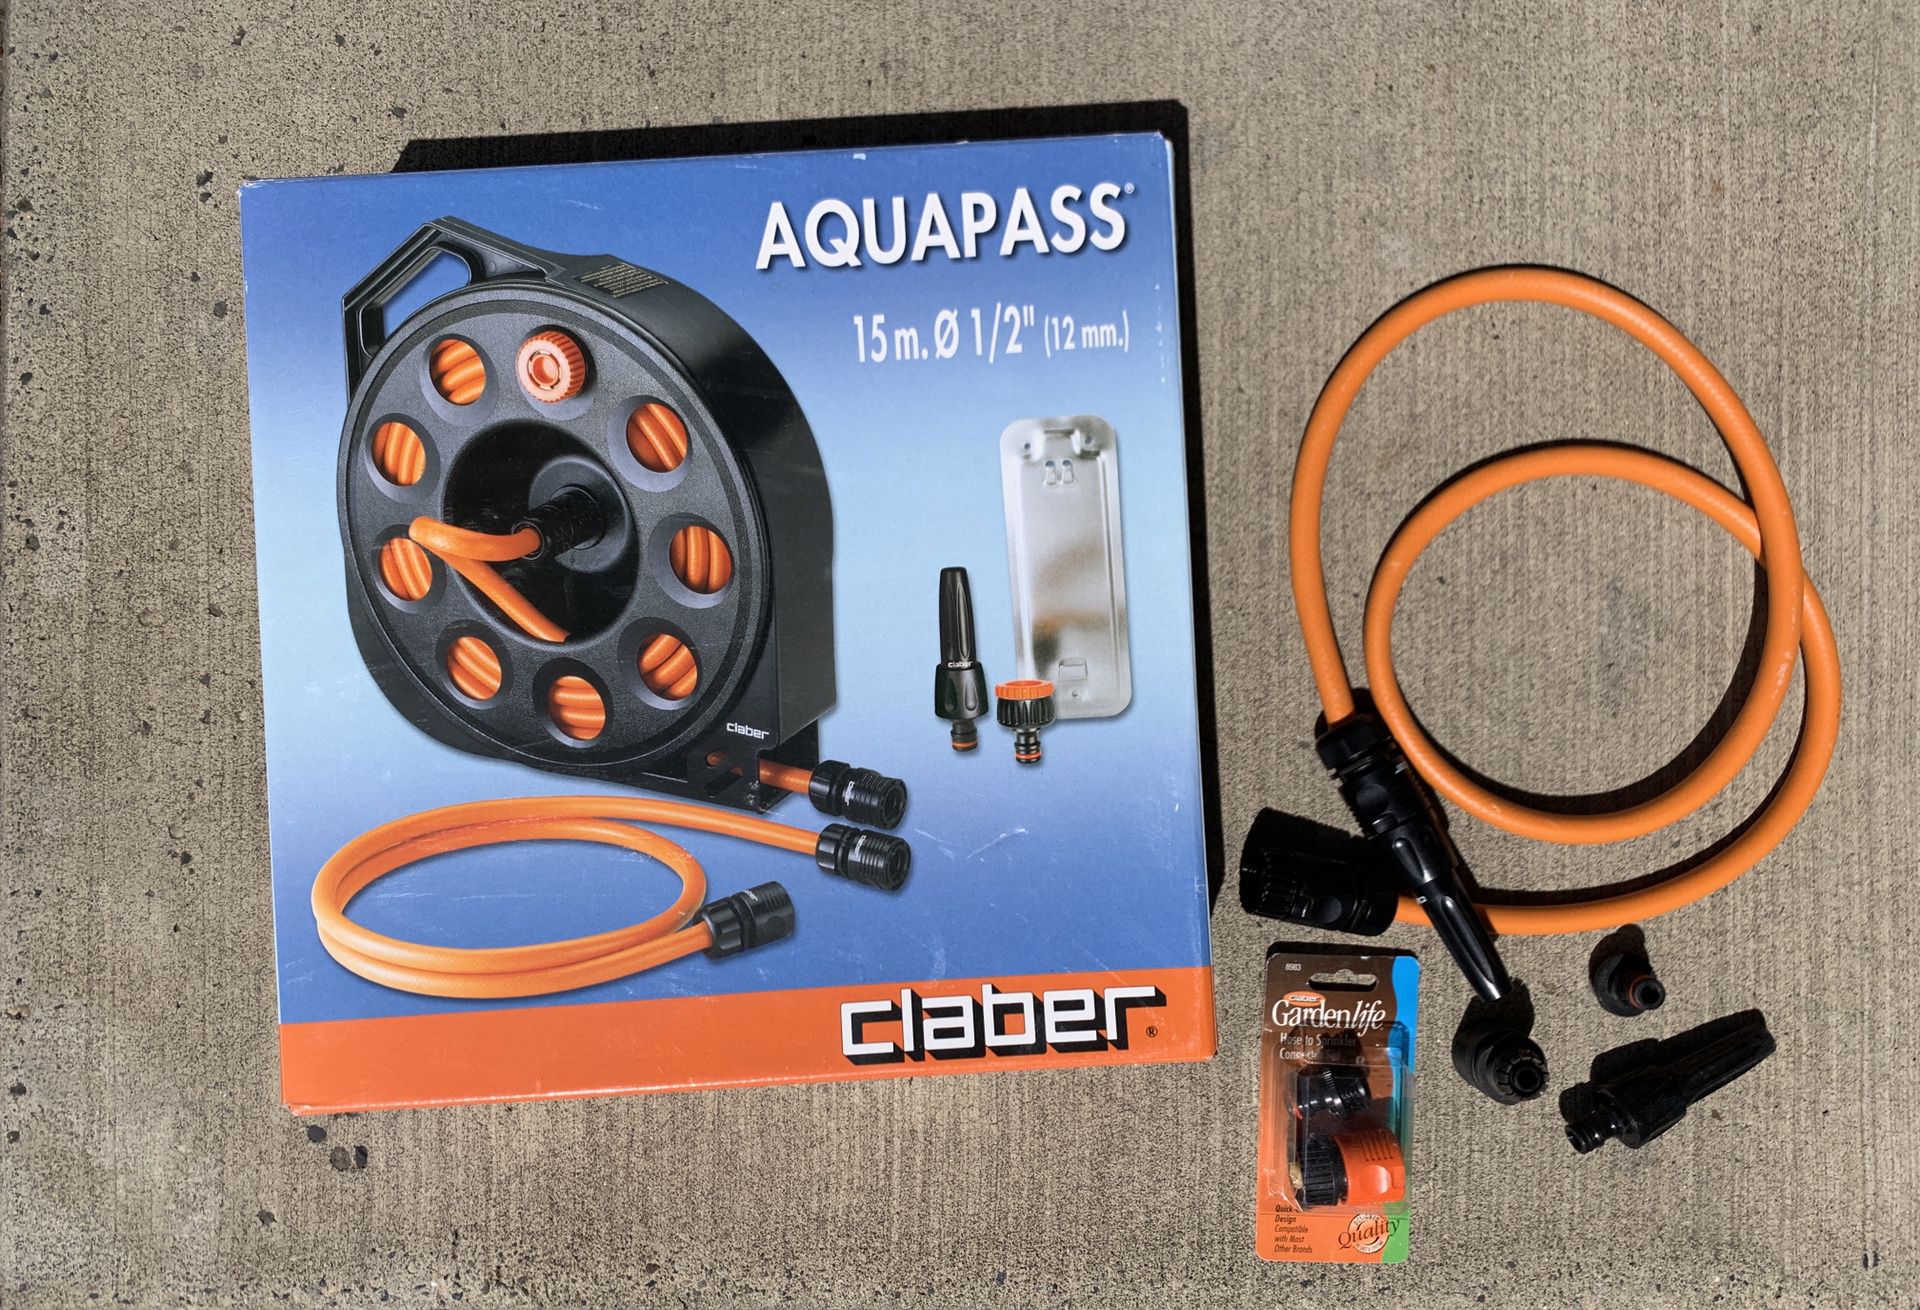 Aquapass water hose with cassette roller